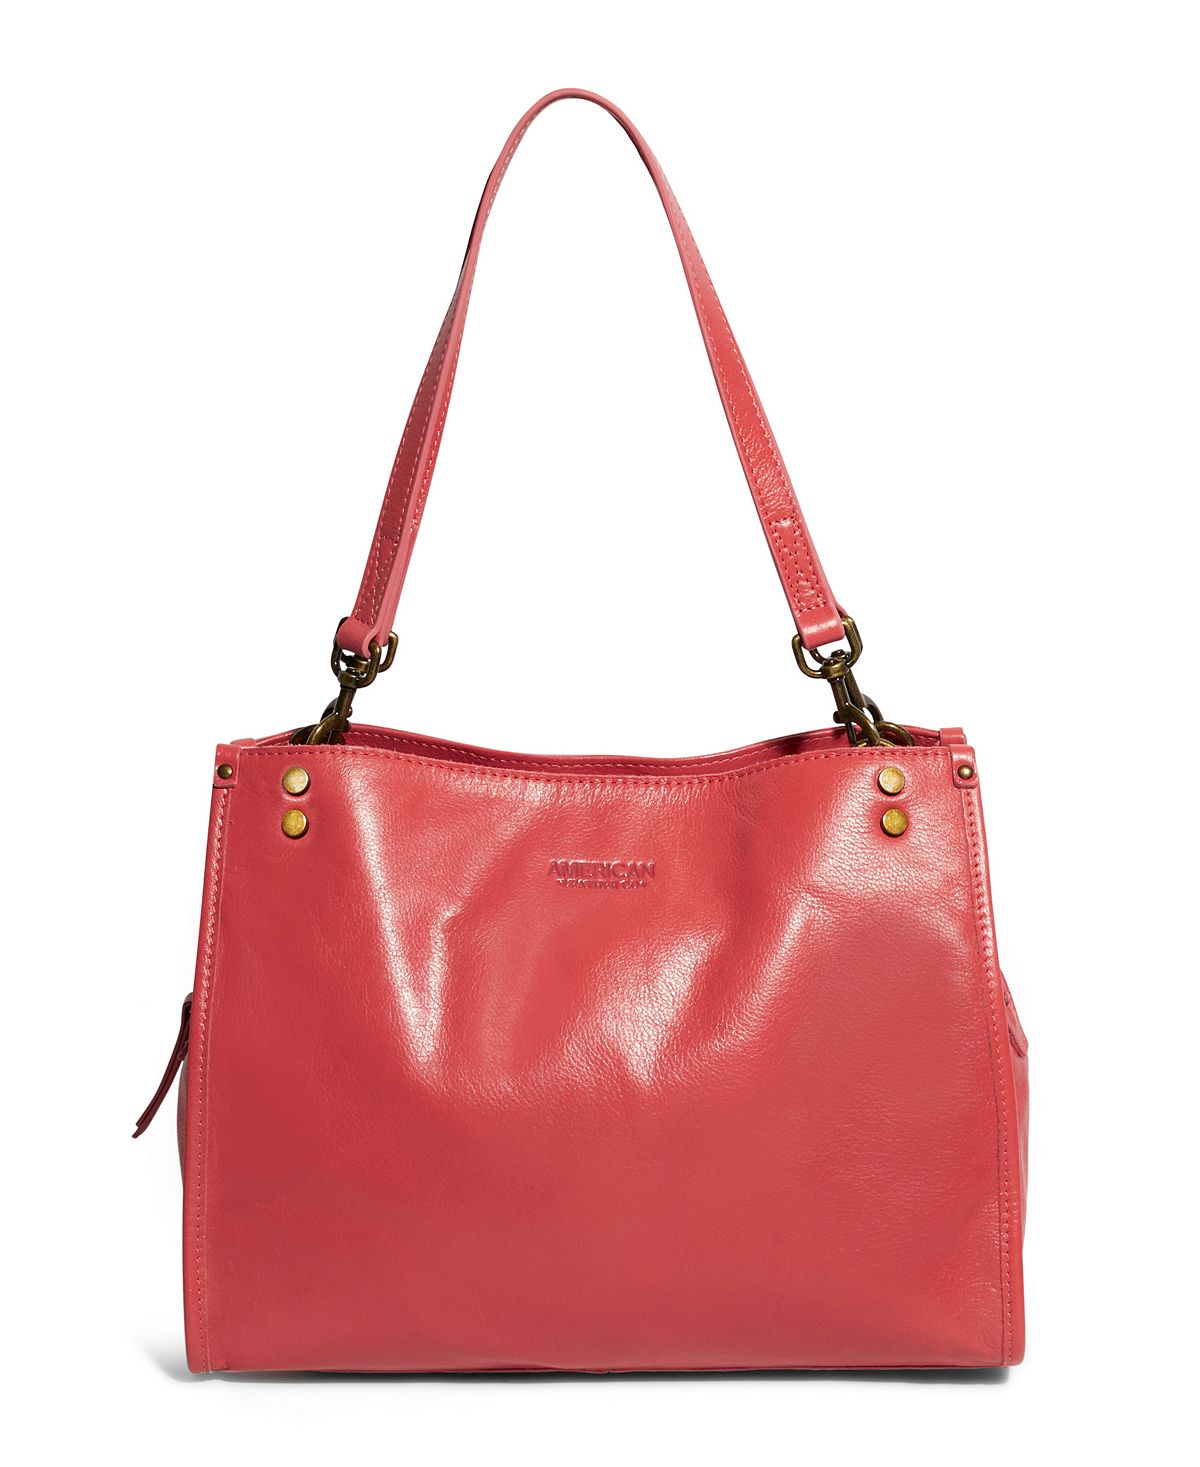 Женская сумка-саквояж Lenox с тройным входом American Leather Co. женский багет julie с ремнем на плечо american leather co